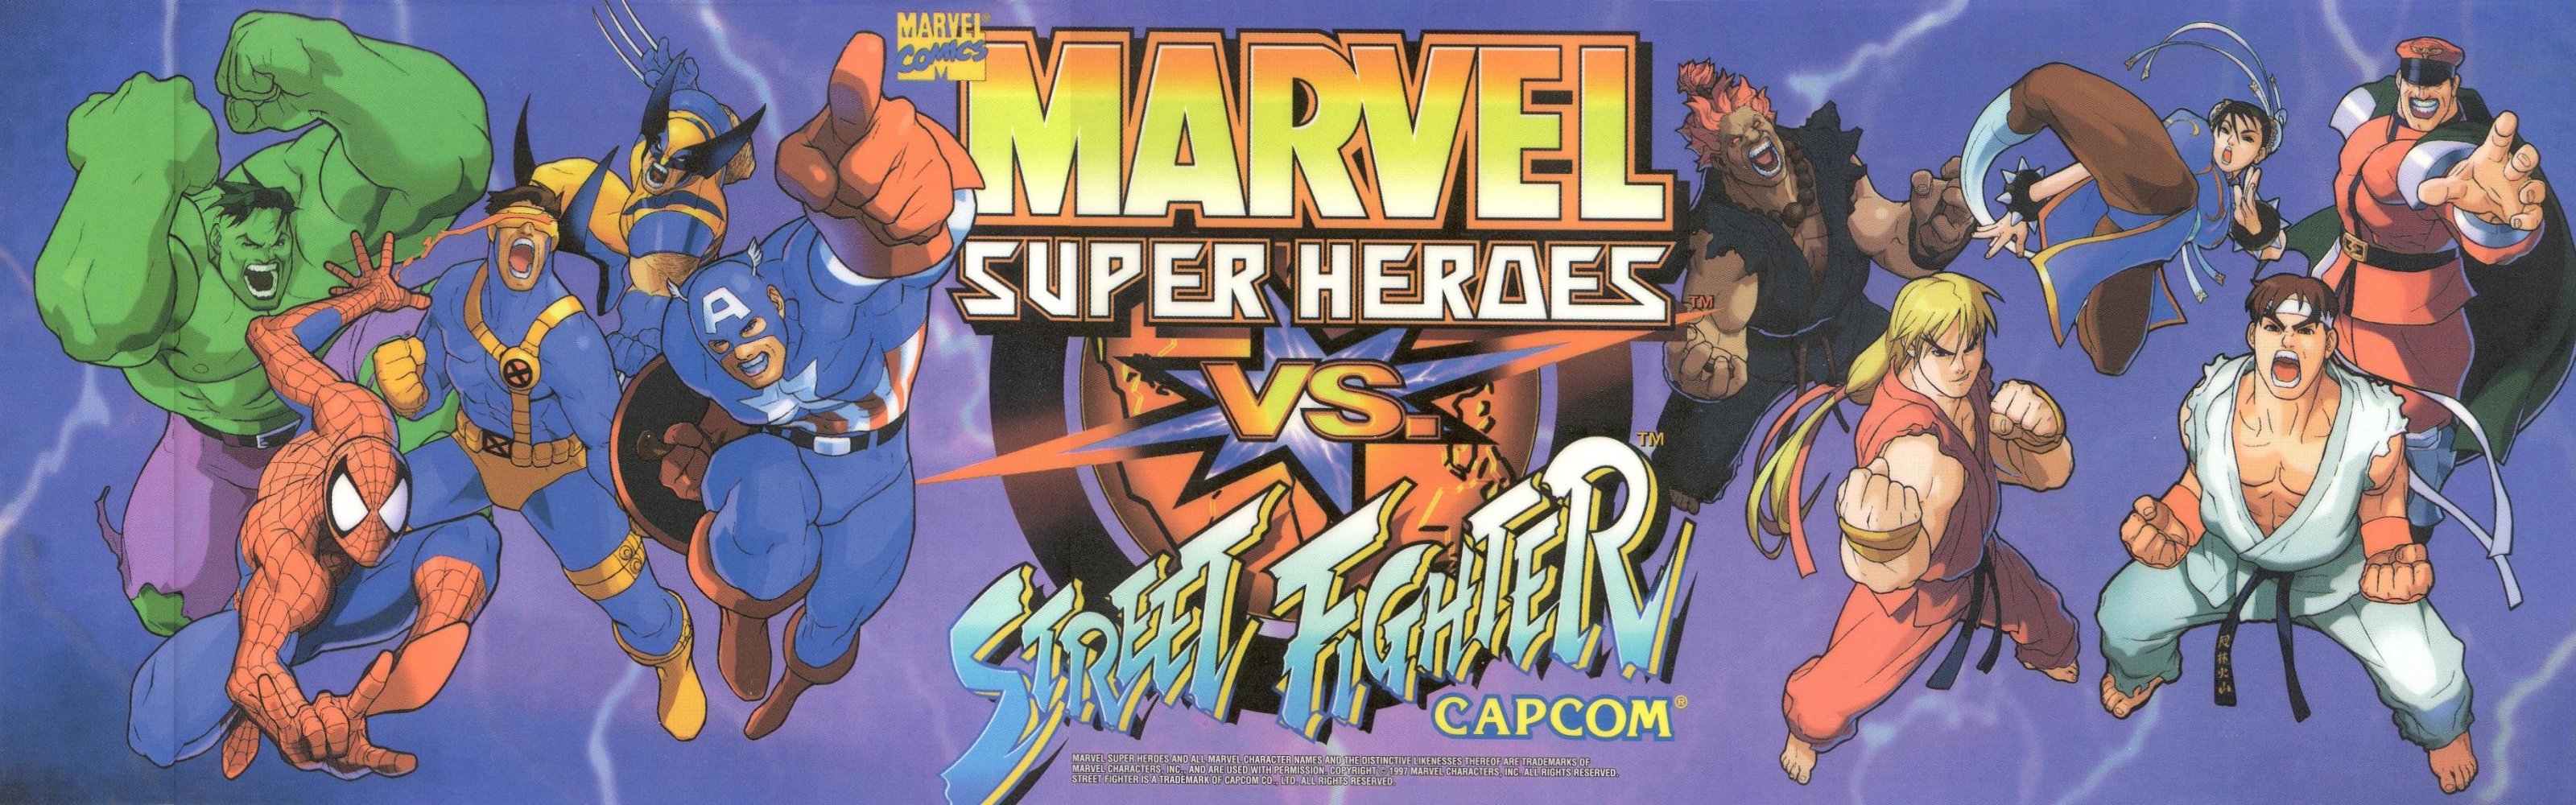 Marvel Super Heroes Vs Street Fighter Tfg Review Artwork Gallery